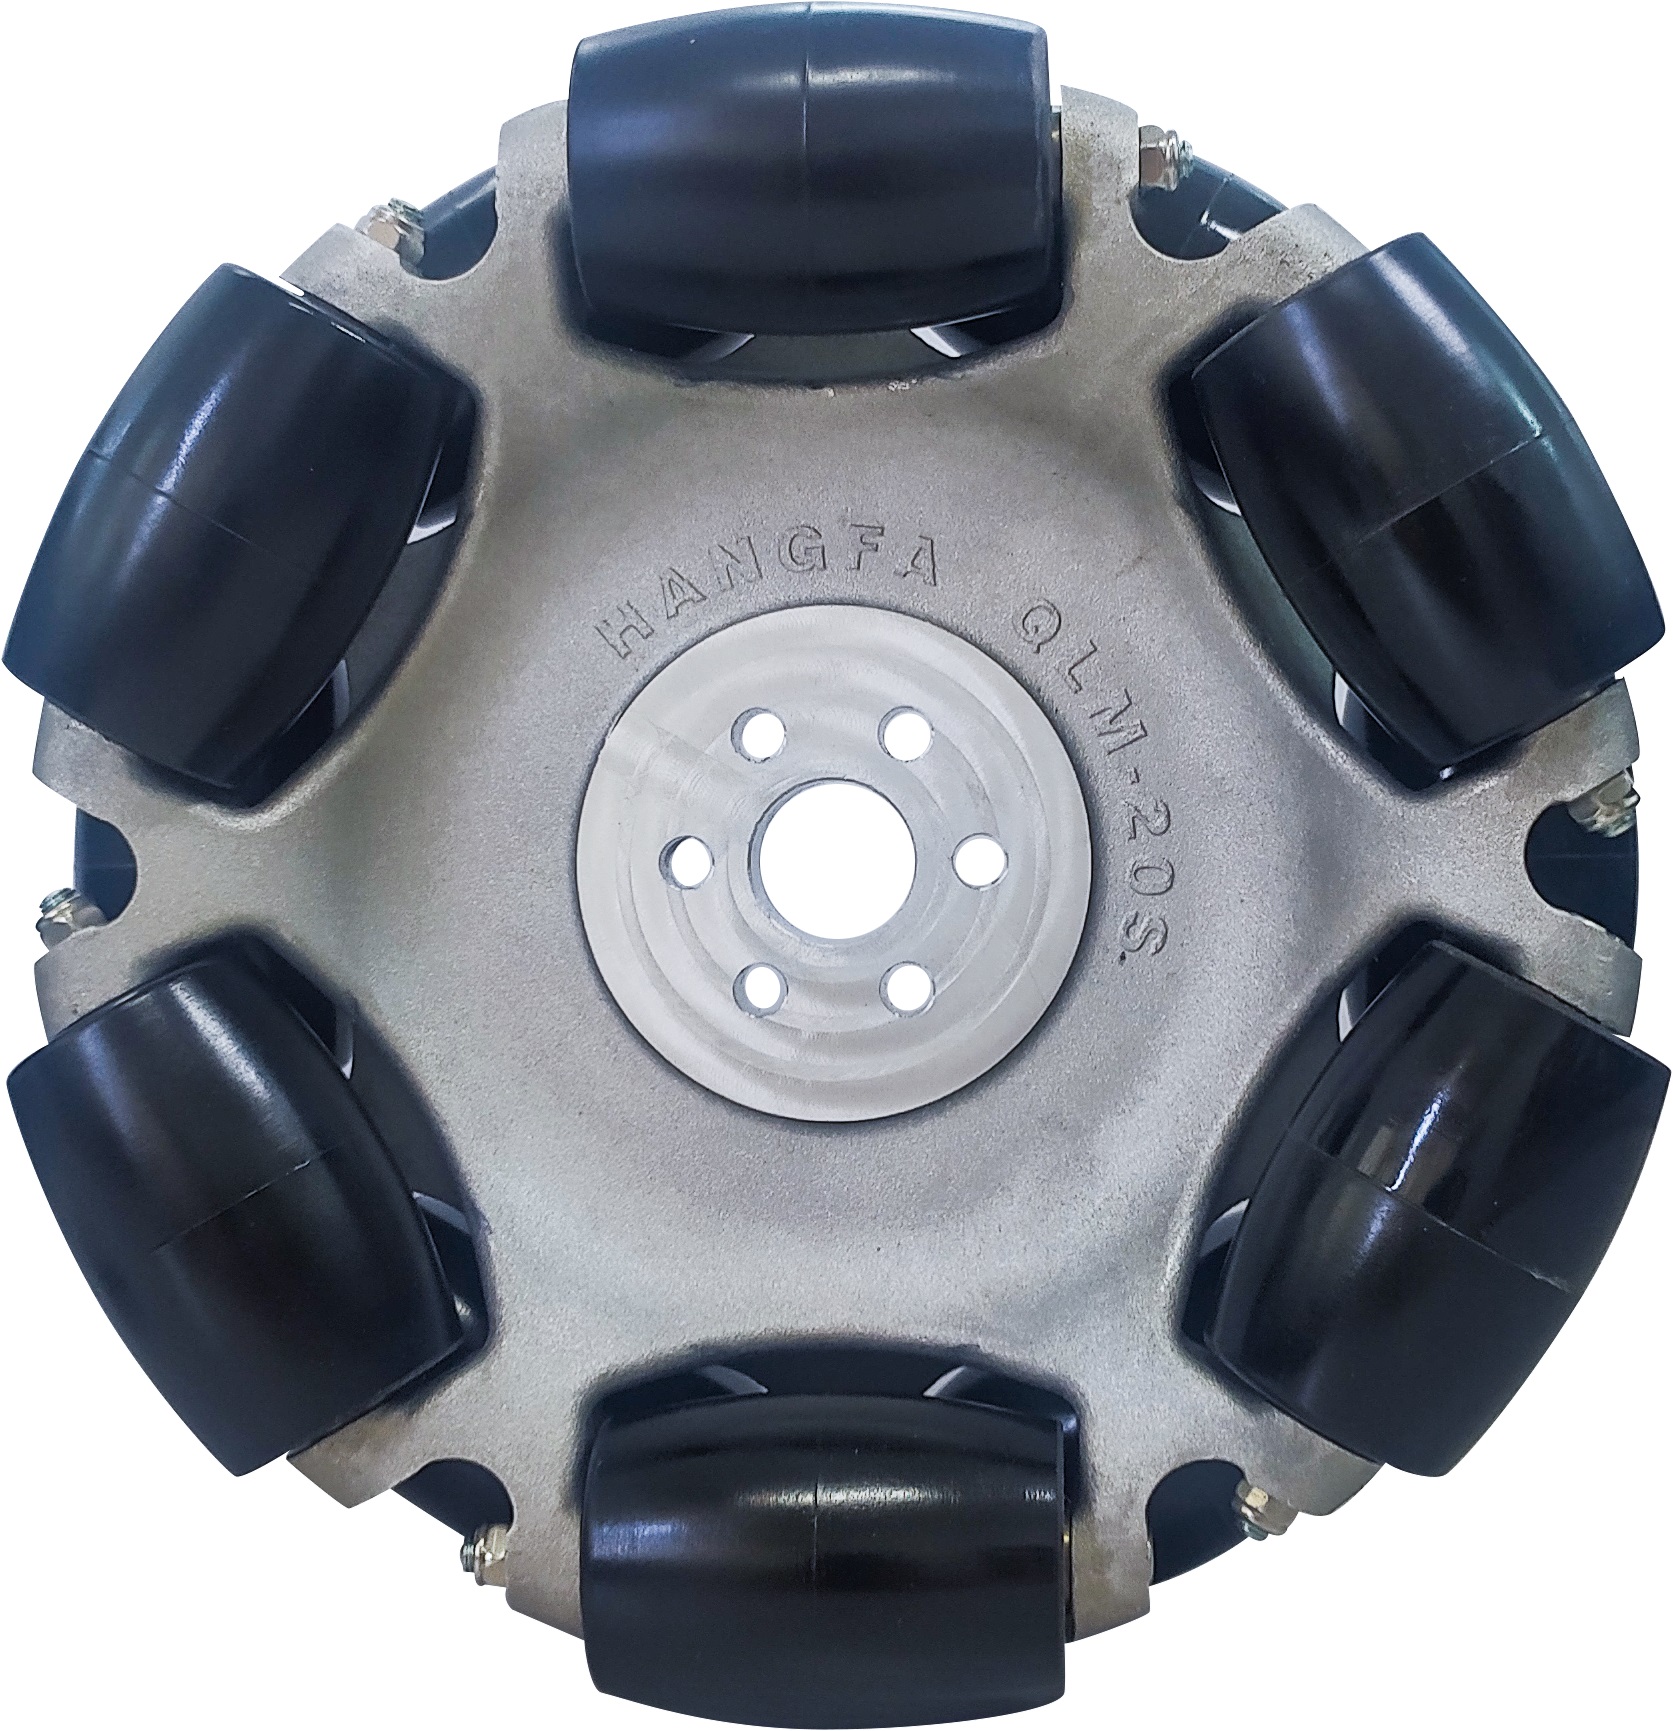 Omni Wheel for Robotics QLM-20S – Oz Robotics